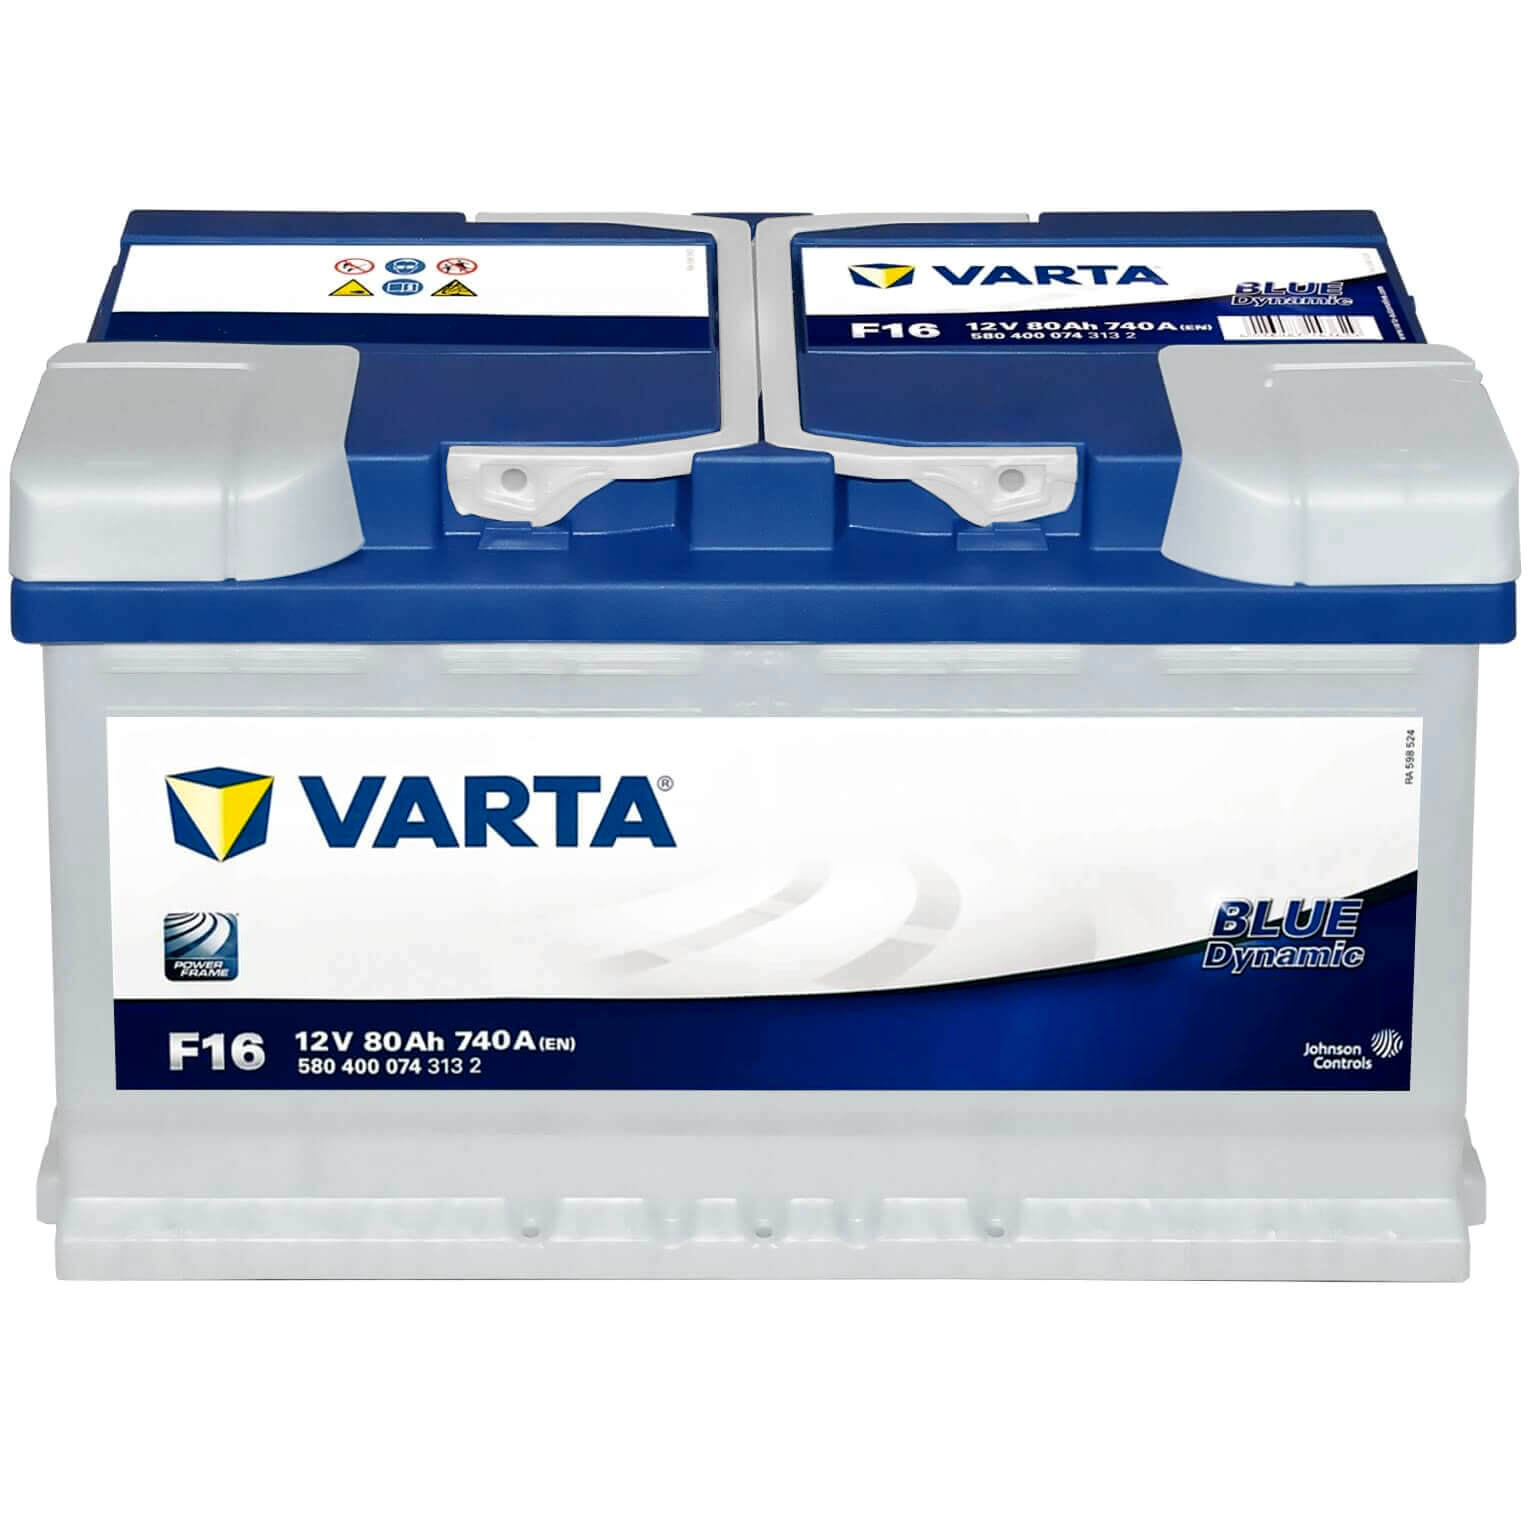 VARTA F16 Blue Dynamic 12V 80Ah 740A Autobatterie 580 400 074, Starterbatterie, Boot, Batterien für